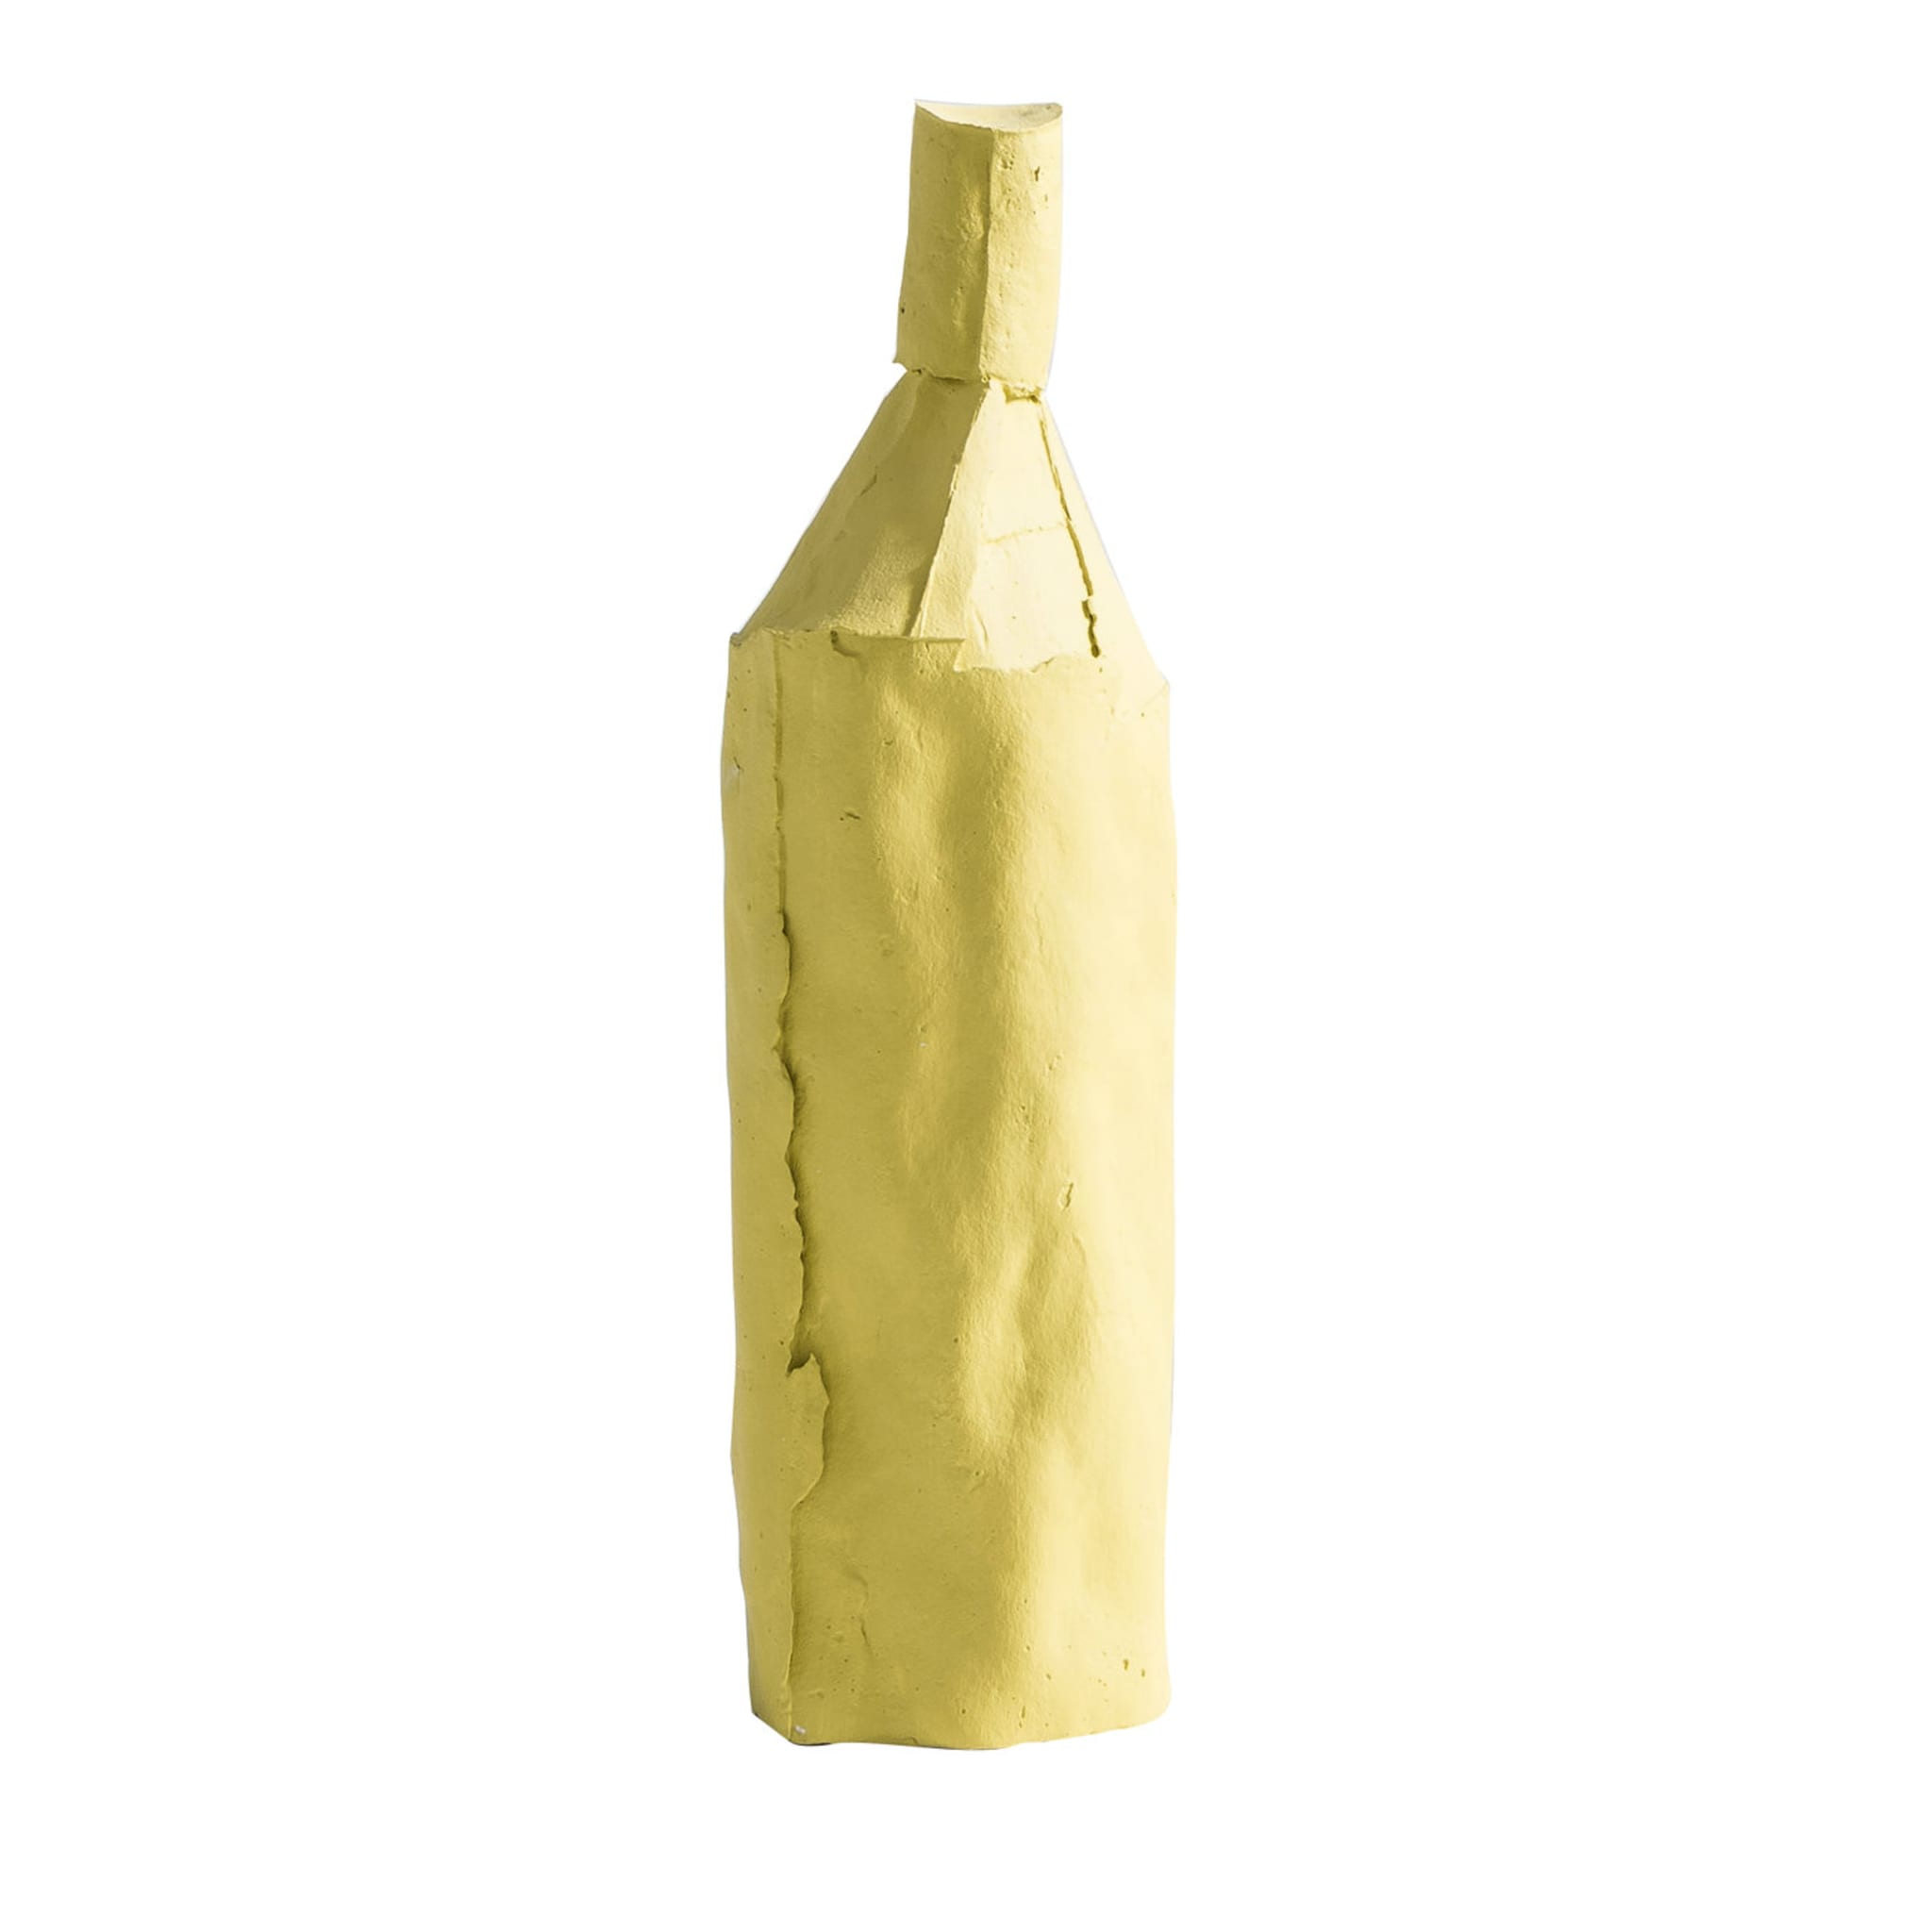 Cartocci Liscia Yellow Decorative Bottle - Main view